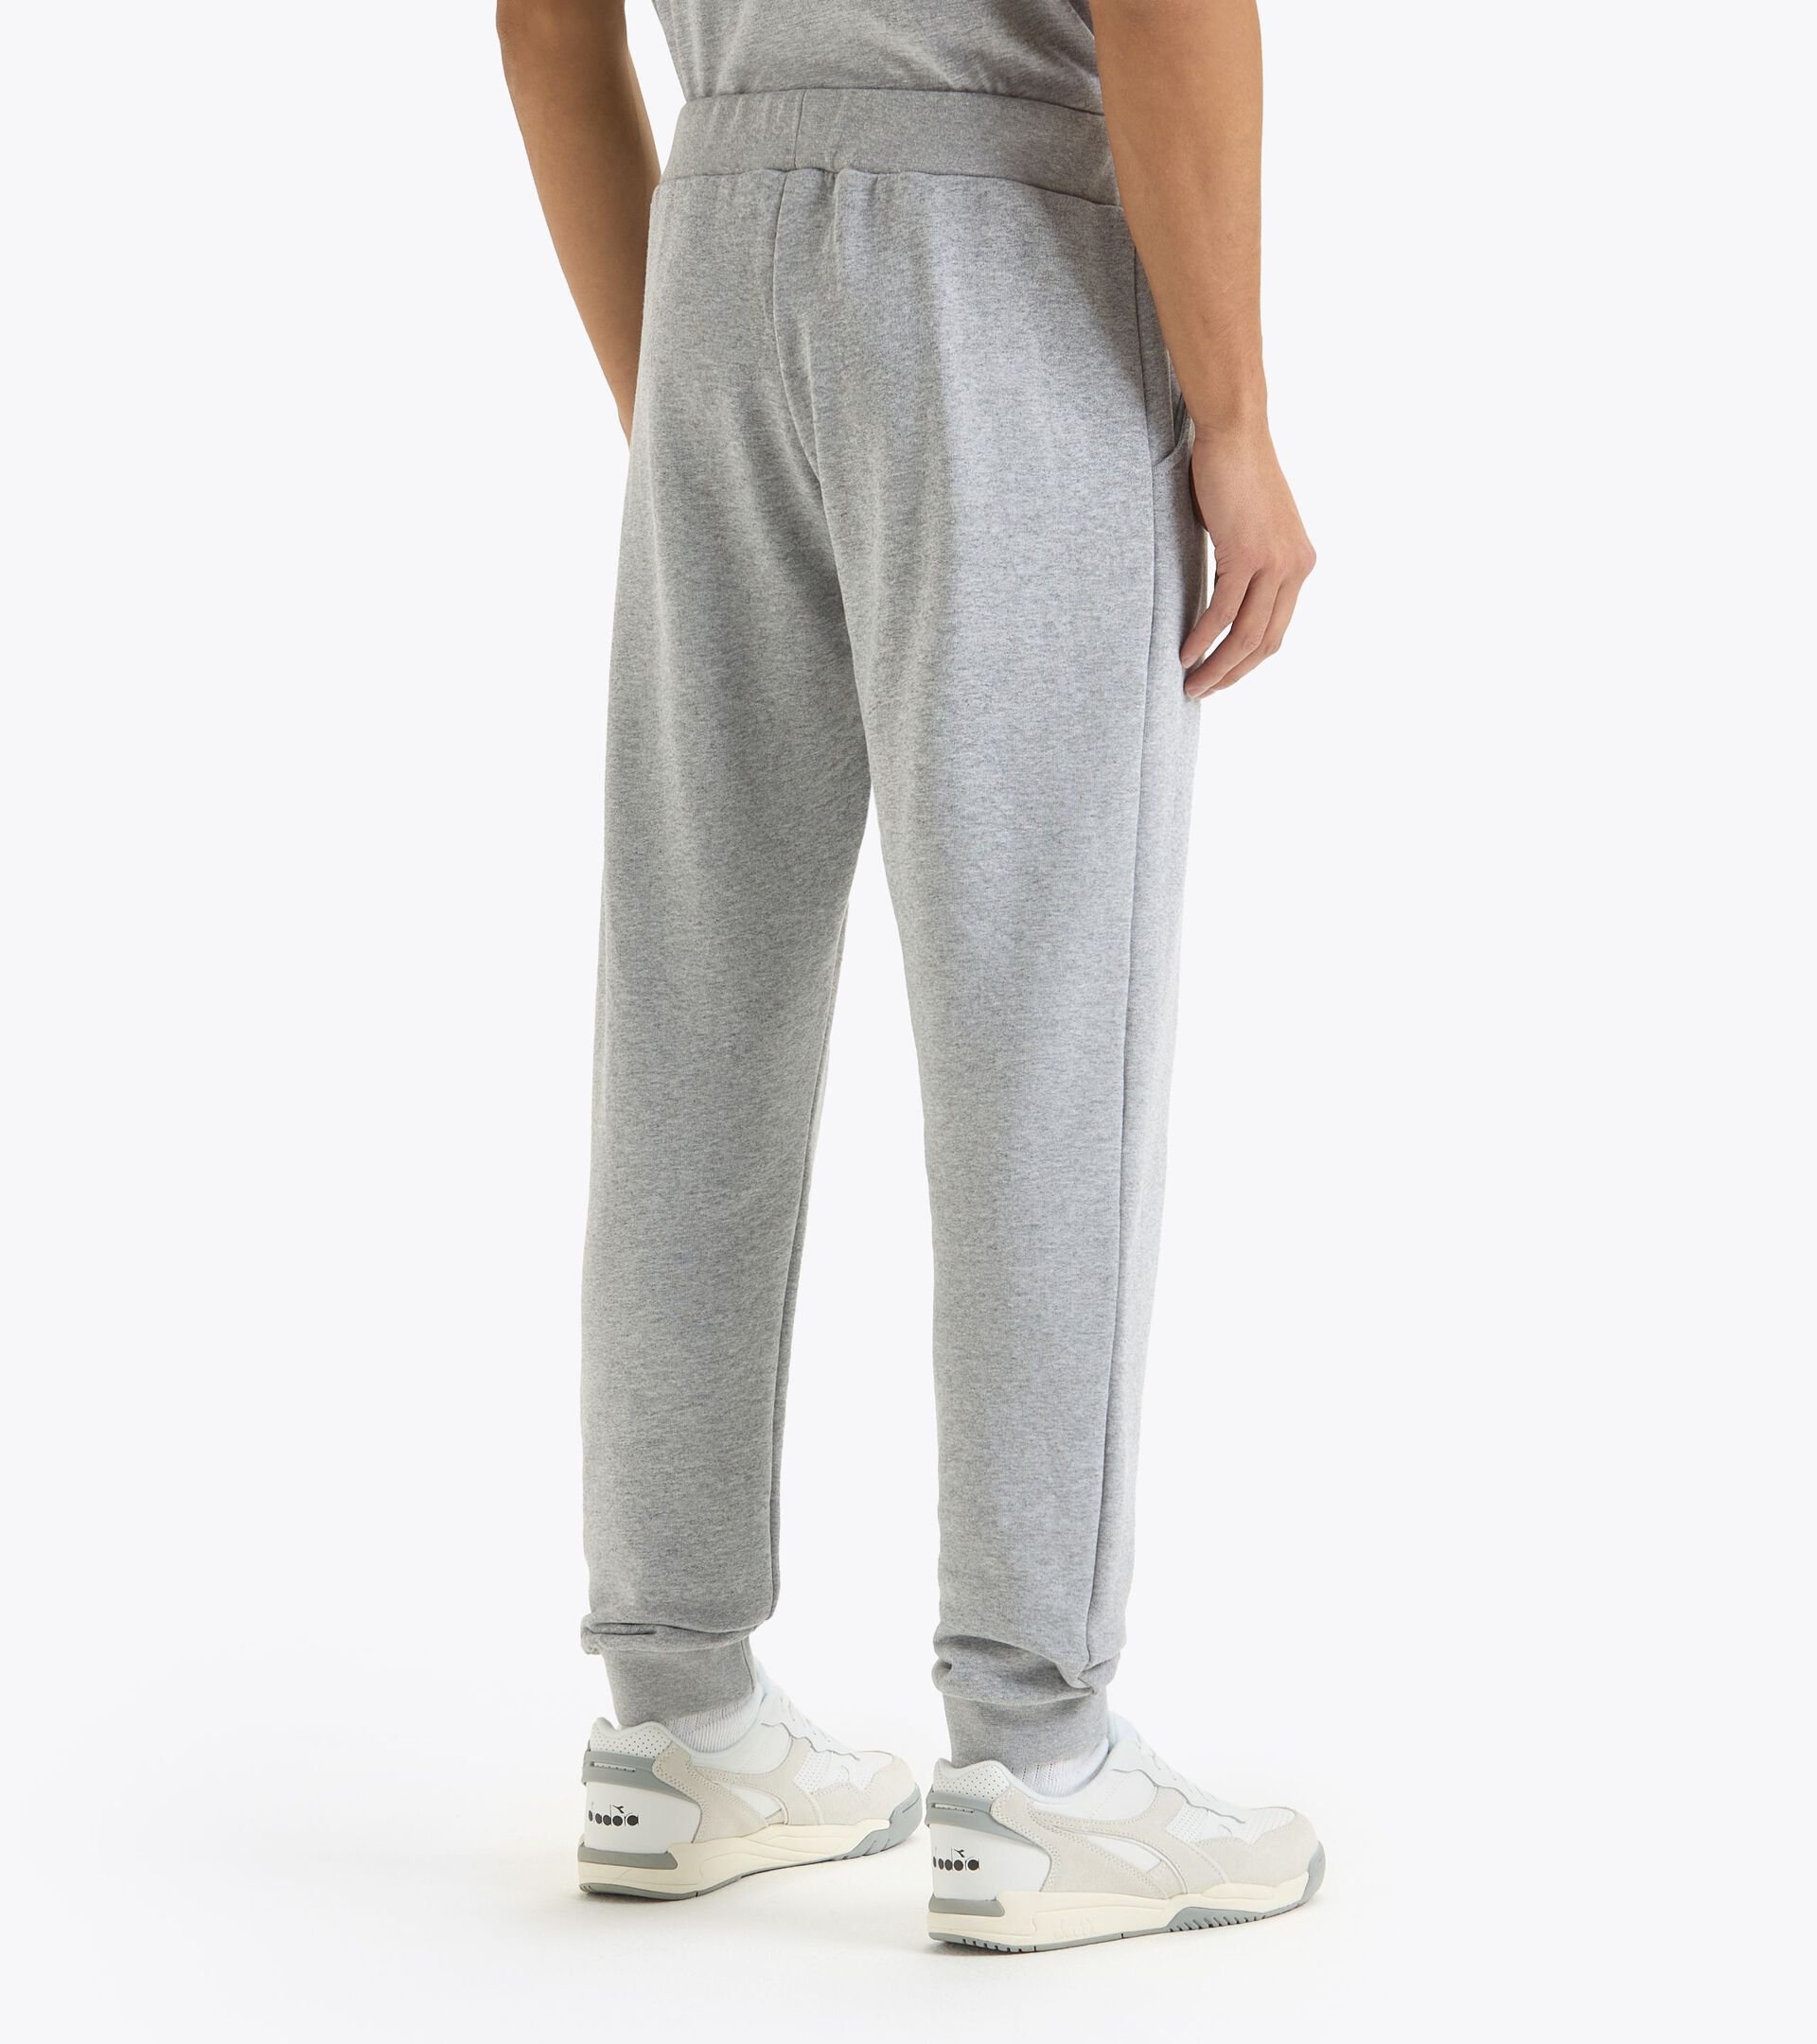 Pantalon de sport - Made in Italy - Gender Neutral PANTS LOGO GRATTE CIEL MELANGE - Diadora